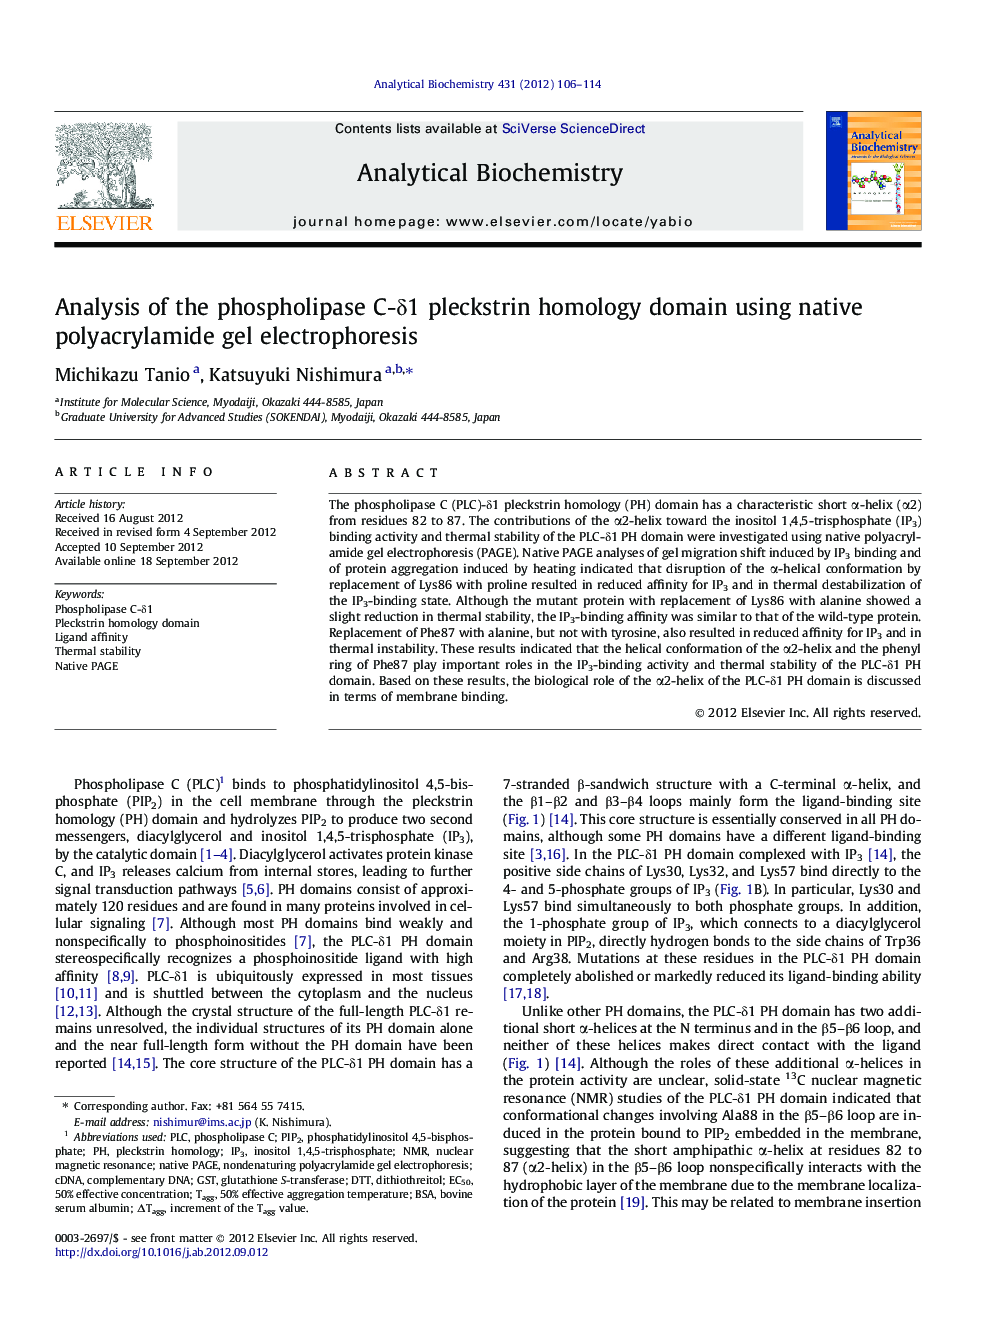 Analysis of the phospholipase C-Î´1 pleckstrin homology domain using native polyacrylamide gel electrophoresis